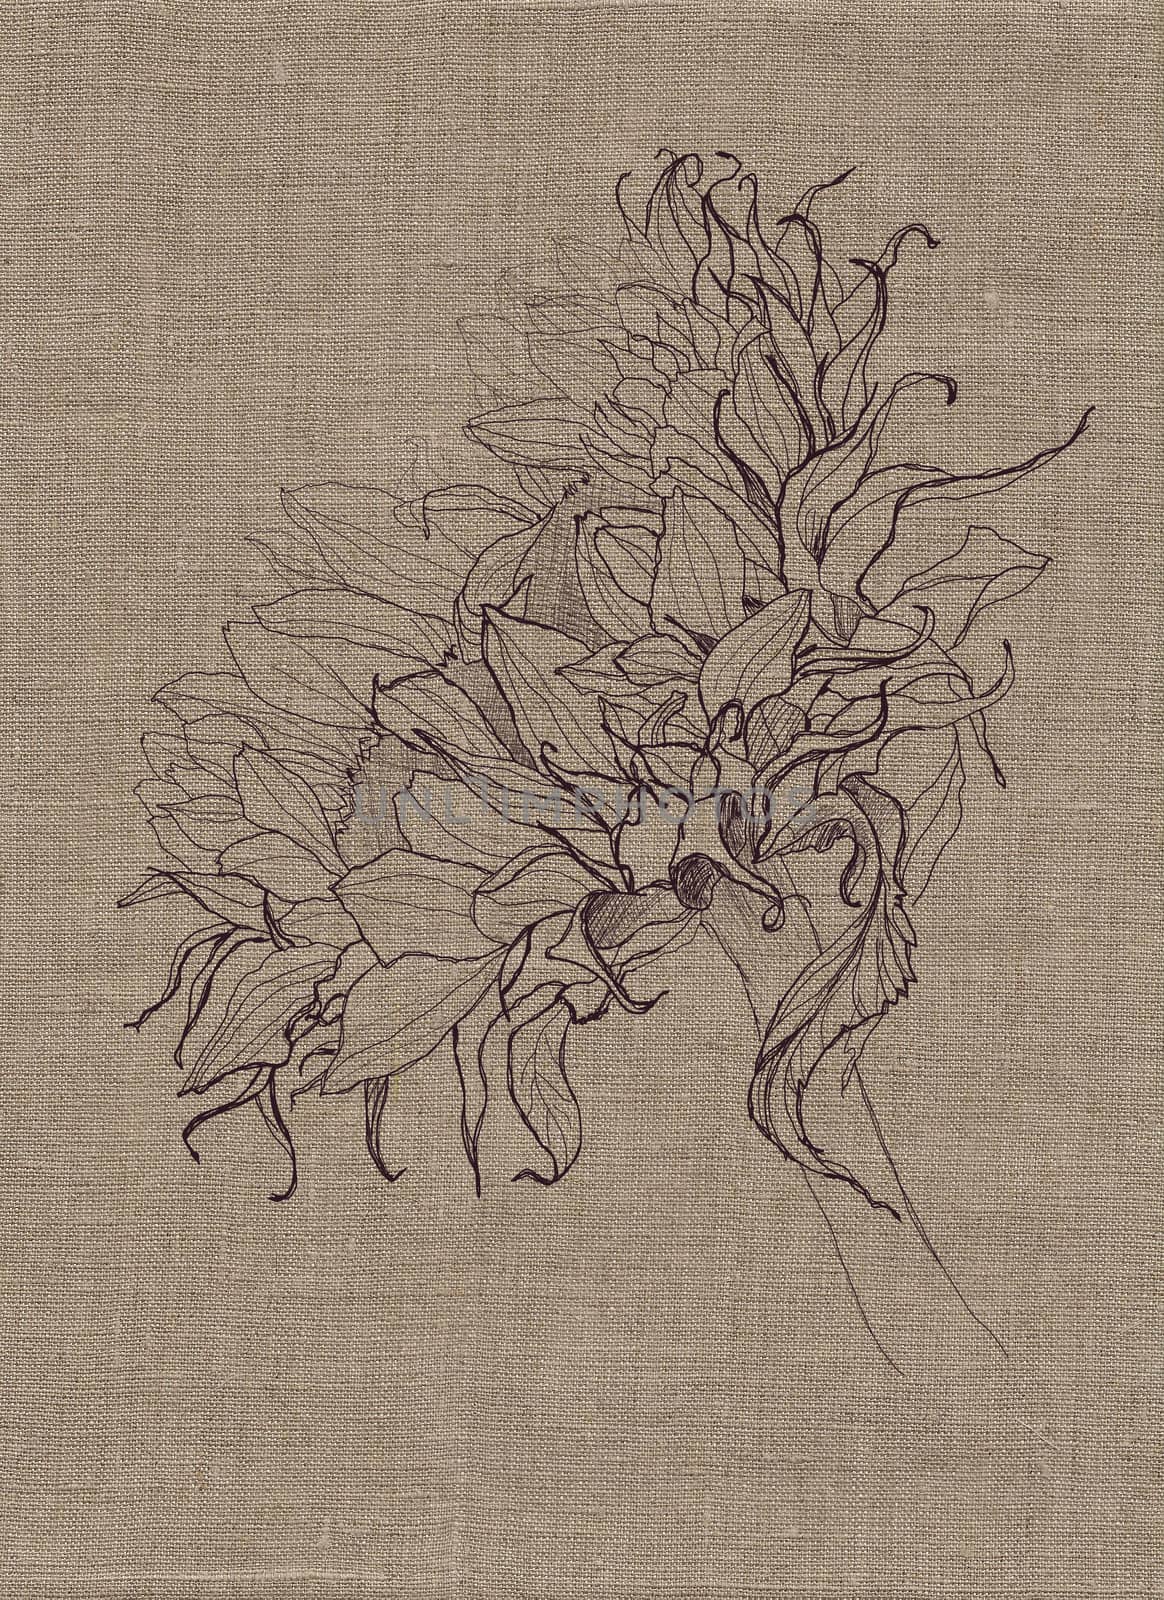 sunflower drawing on beige linen canvas texture background